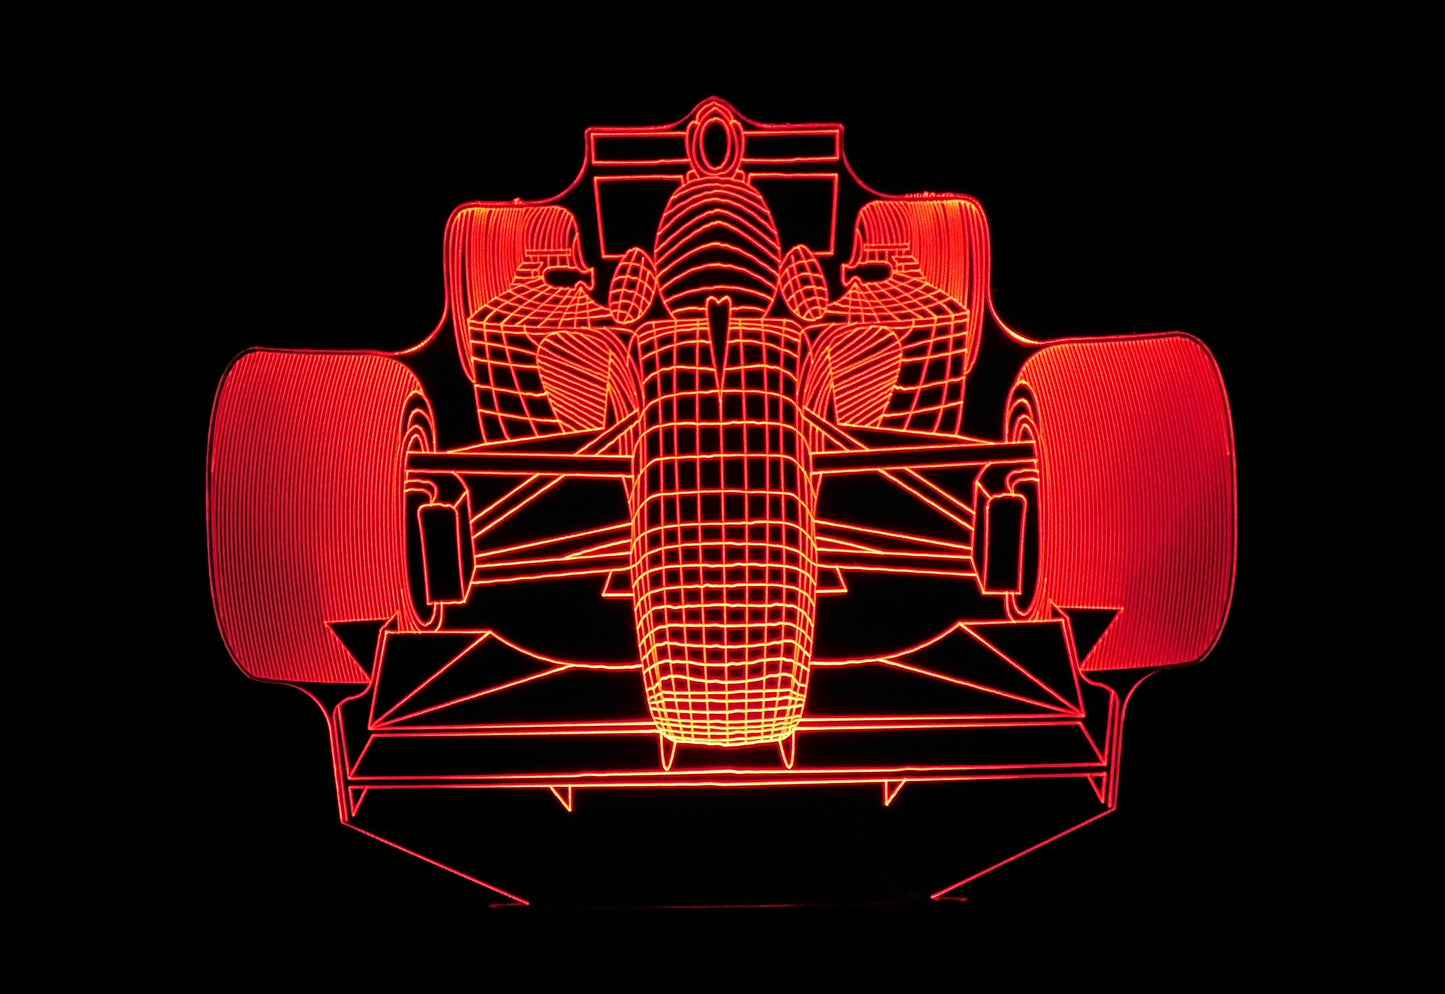 Formula 1 Front of Race Car 3-D Optical Illusion Multicolored Light